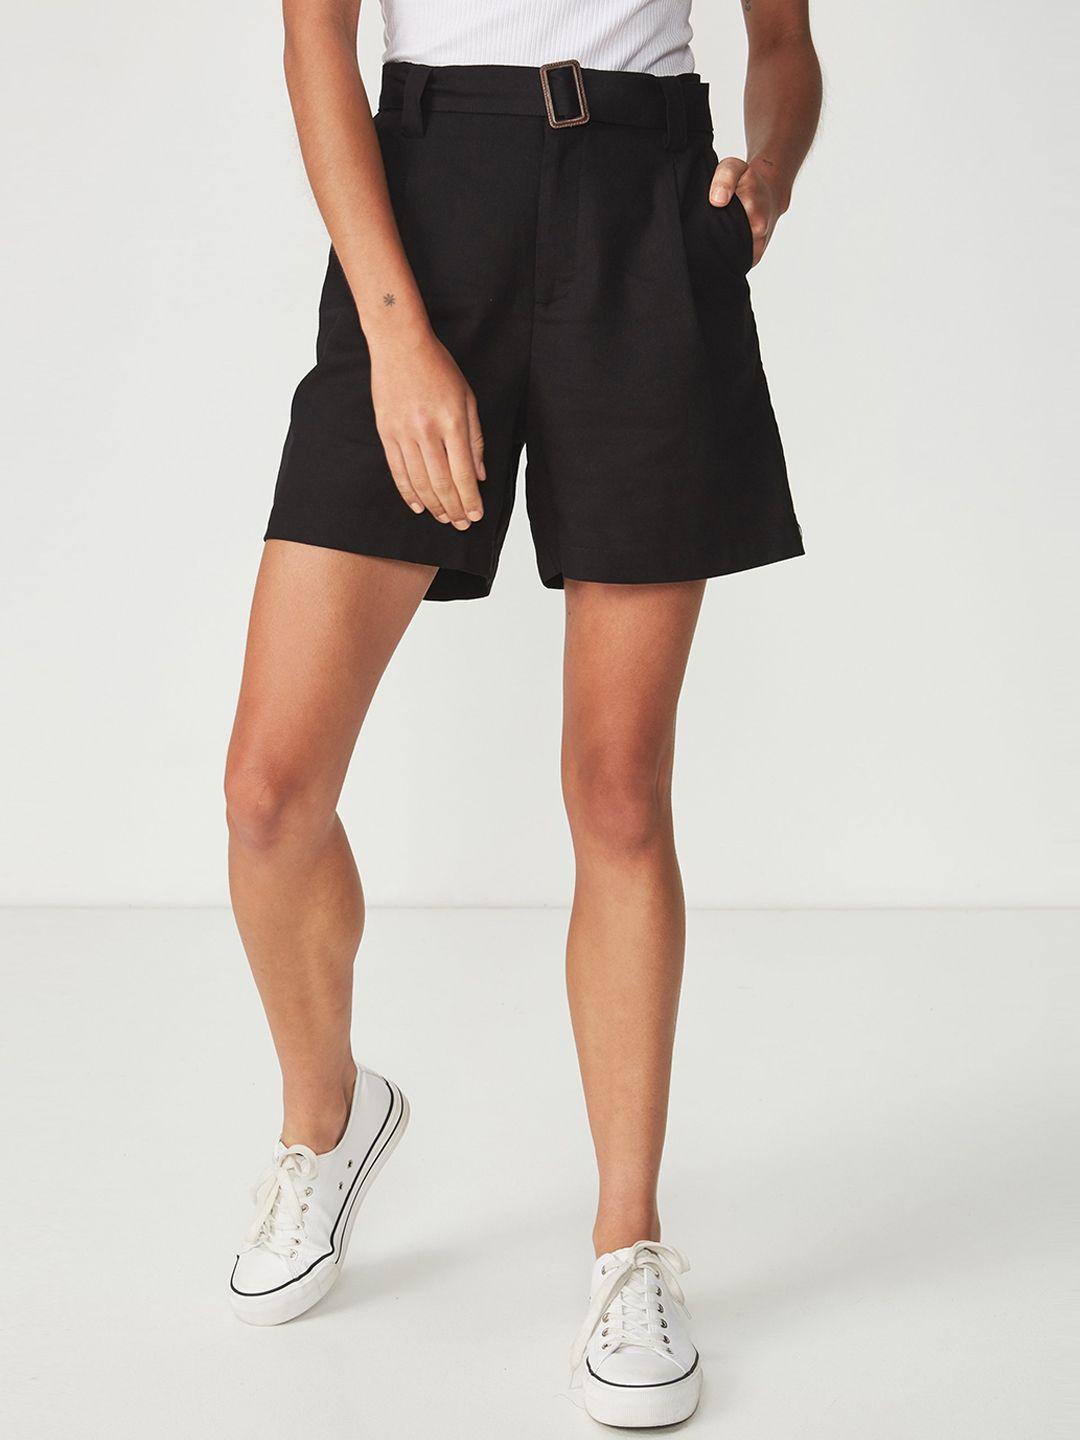 cotton on women black solid loose fit regular shorts